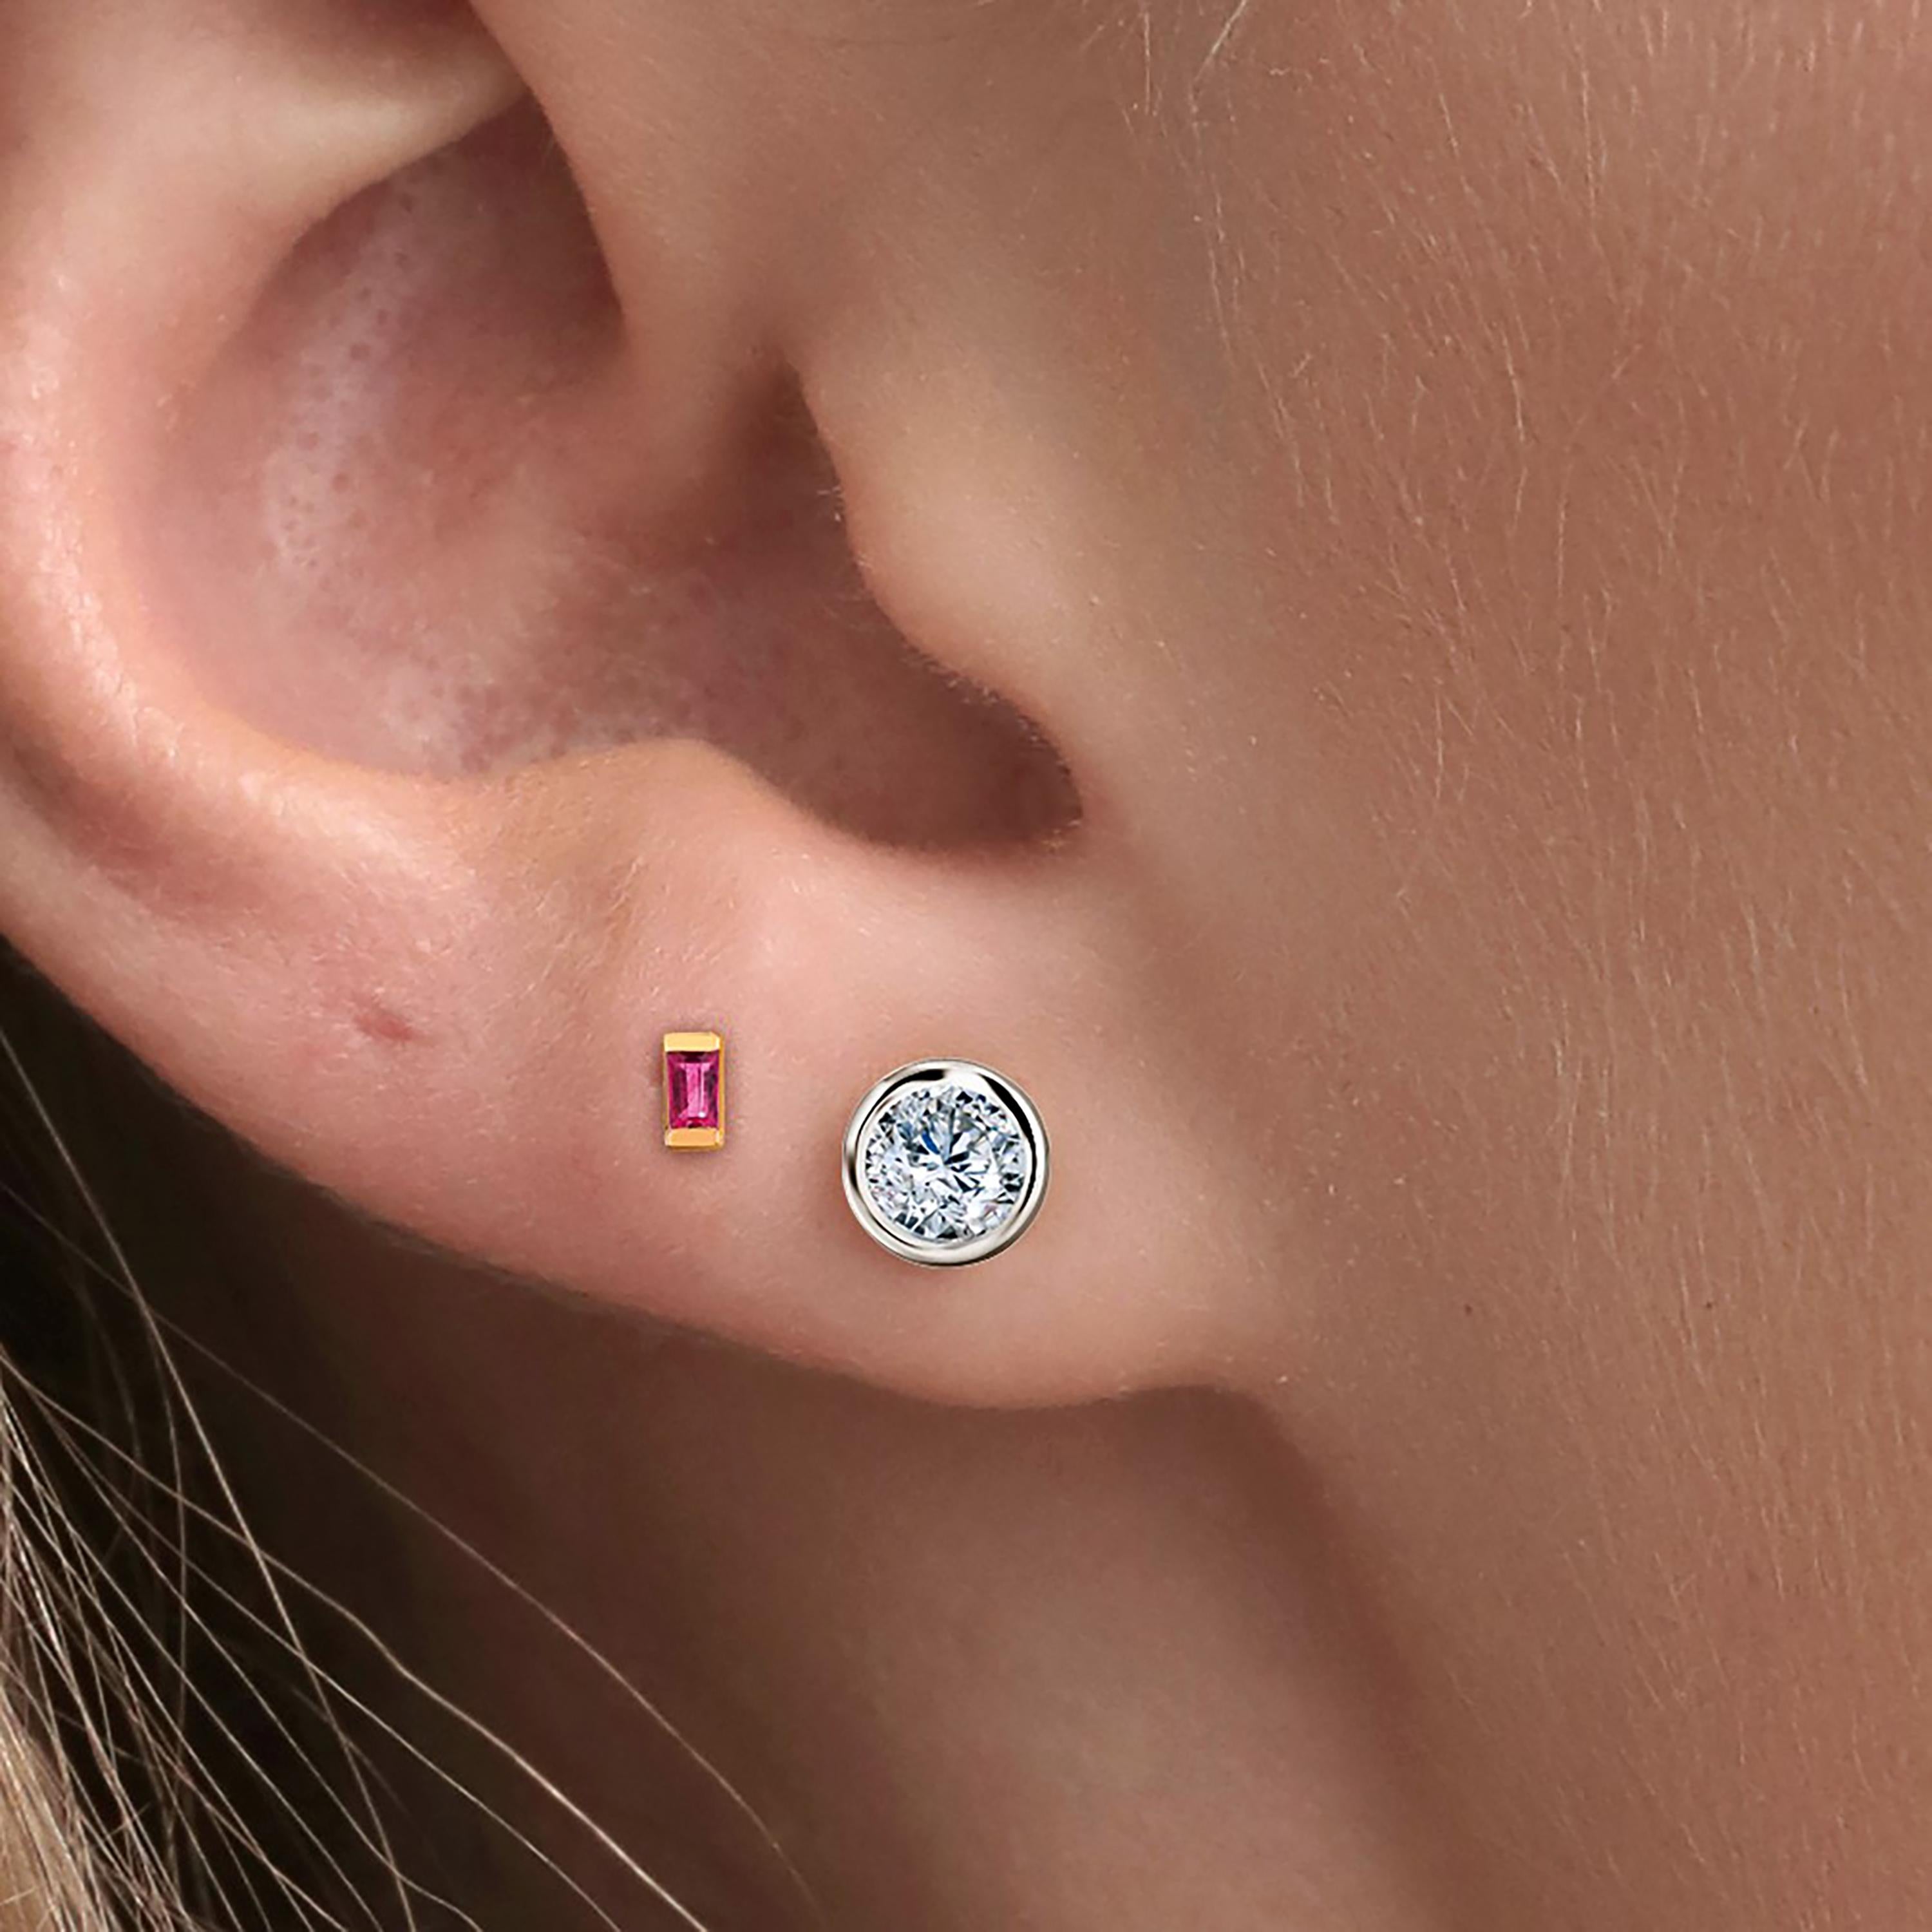 third hole earrings